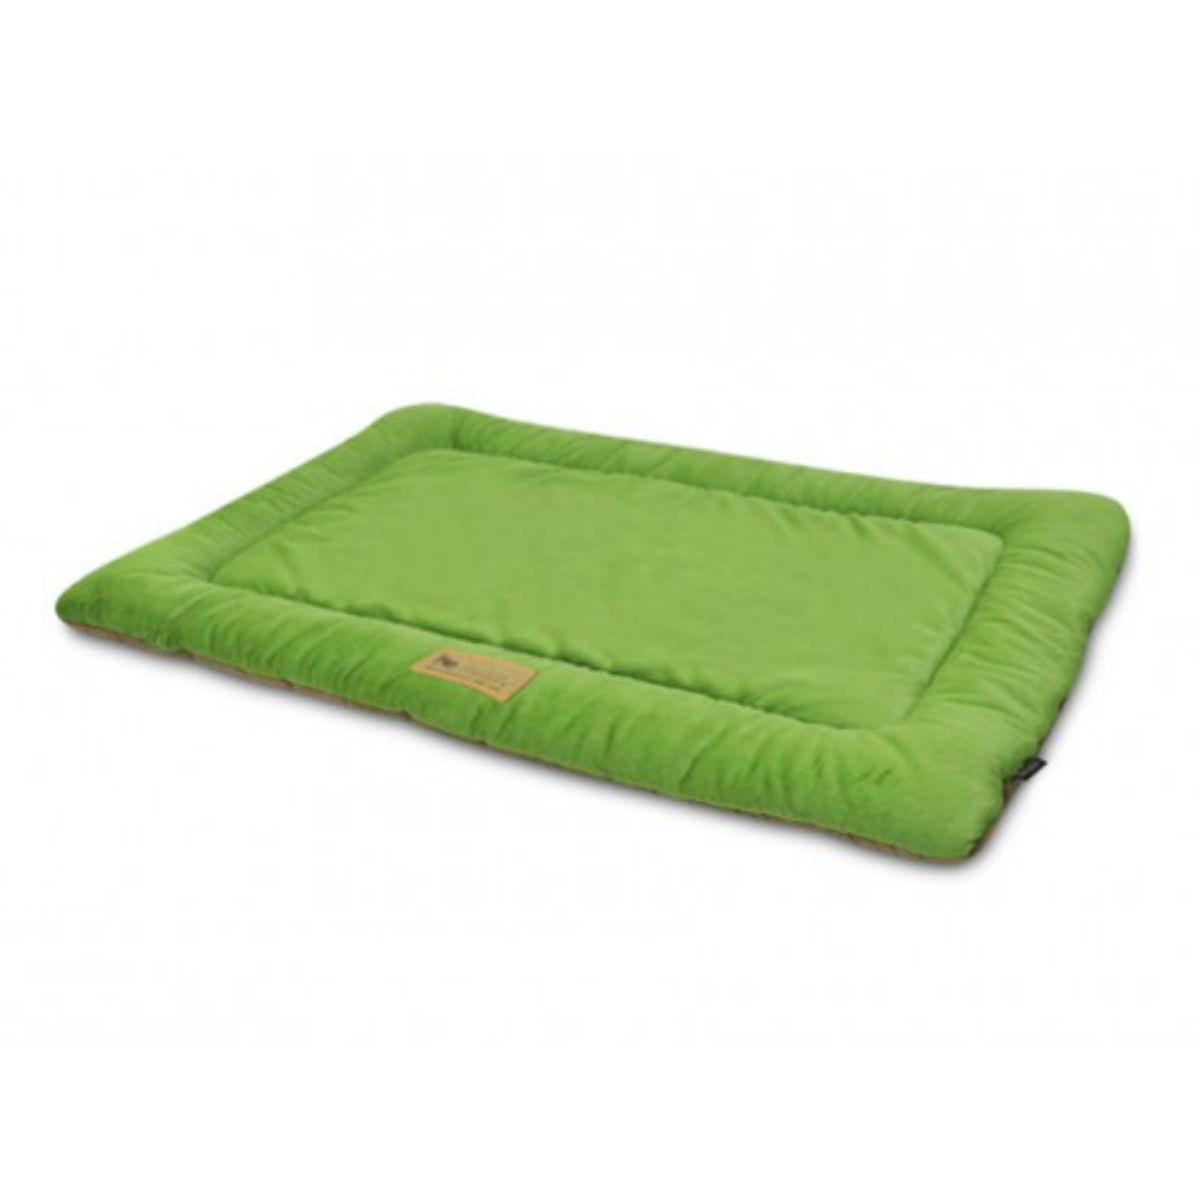 P.L.A.Y. Chill Pad Pet Bed - Green/Hazelnut